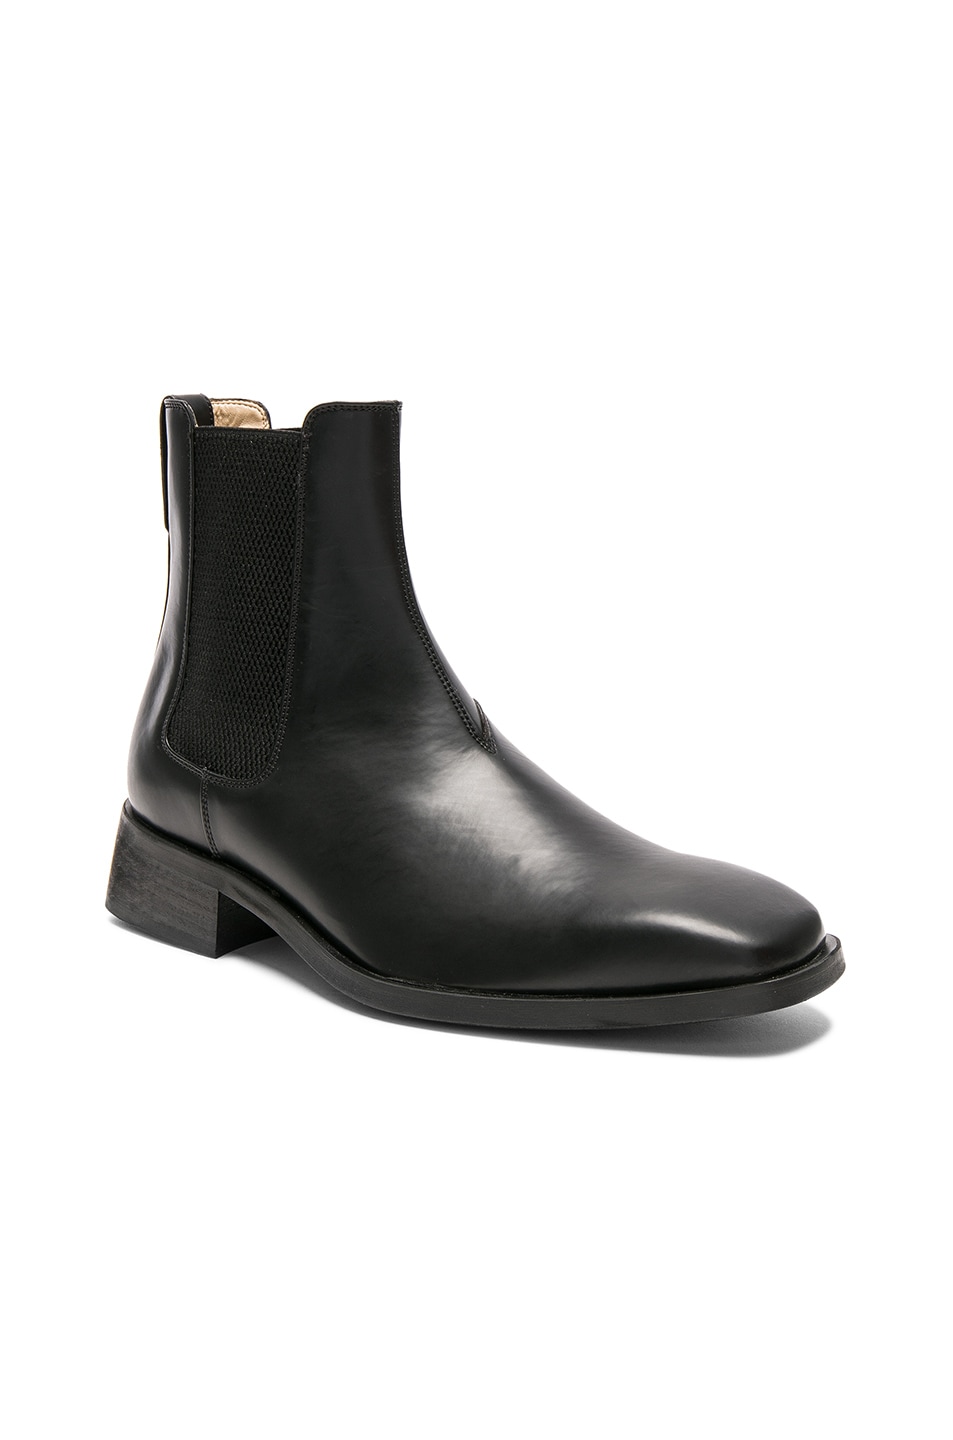 Stella McCartney Chelsea Boots in Black & Black | FWRD